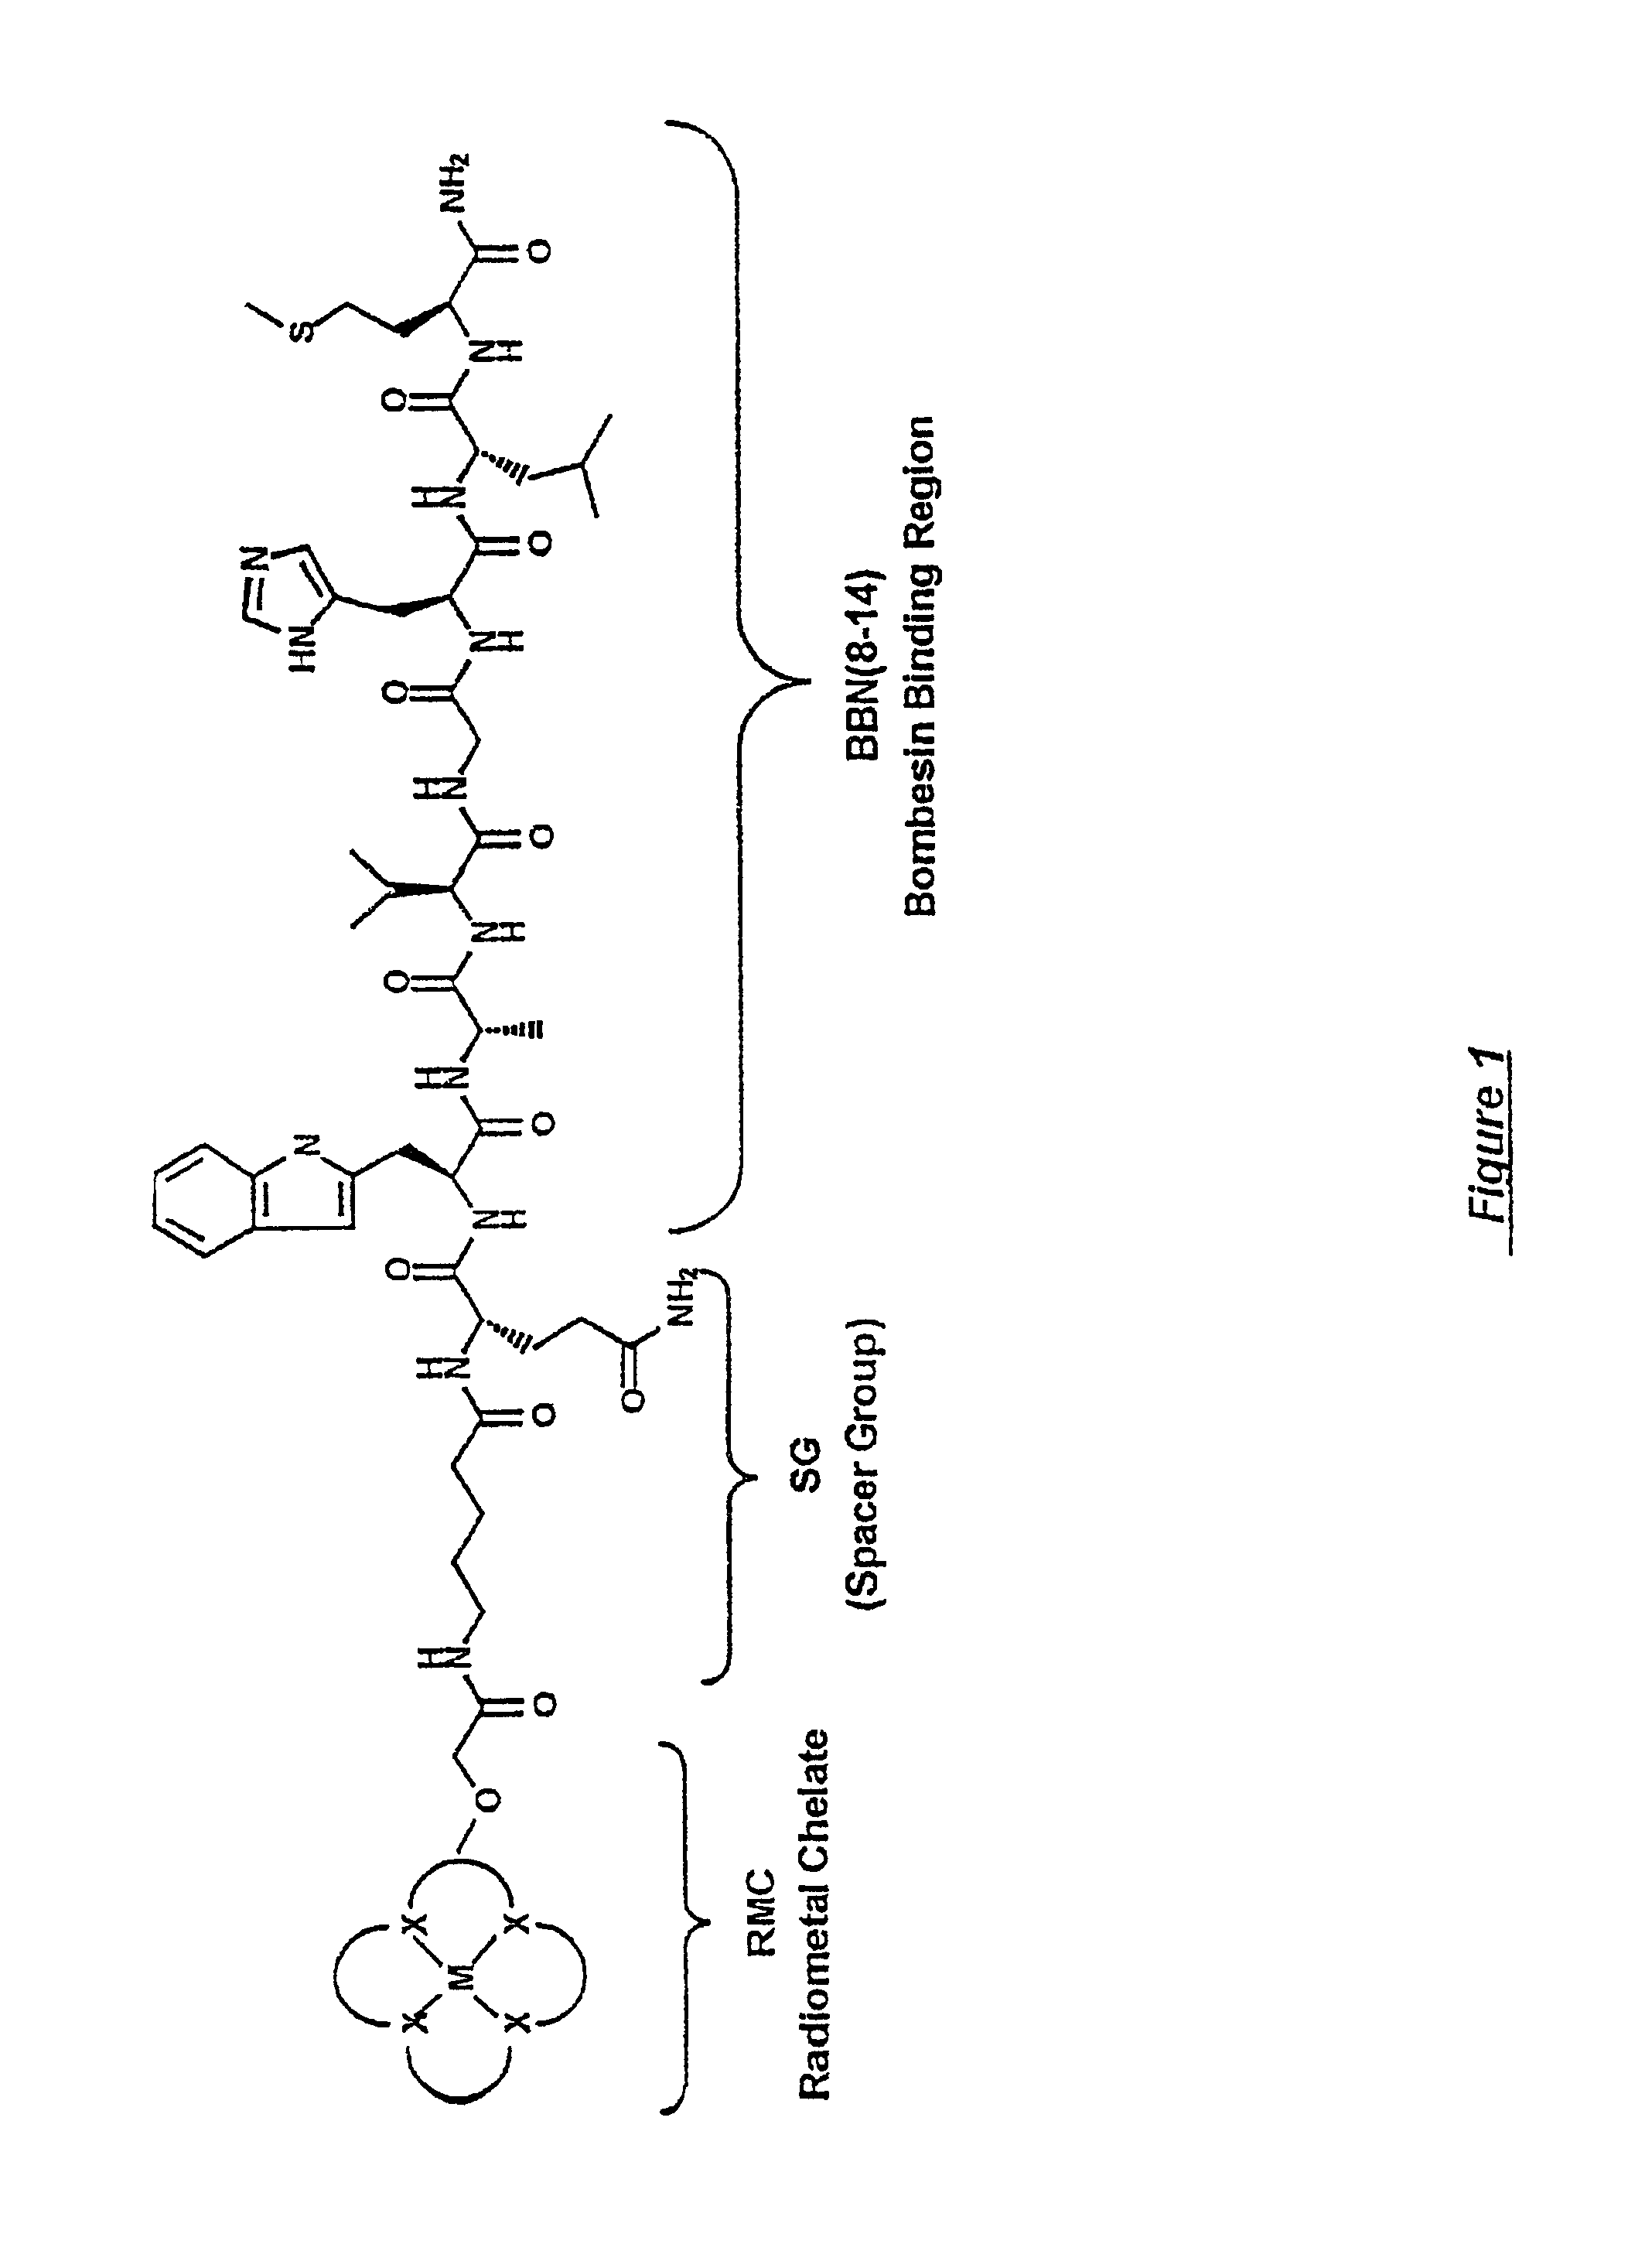 Gastrin receptor-avid peptide conjugates